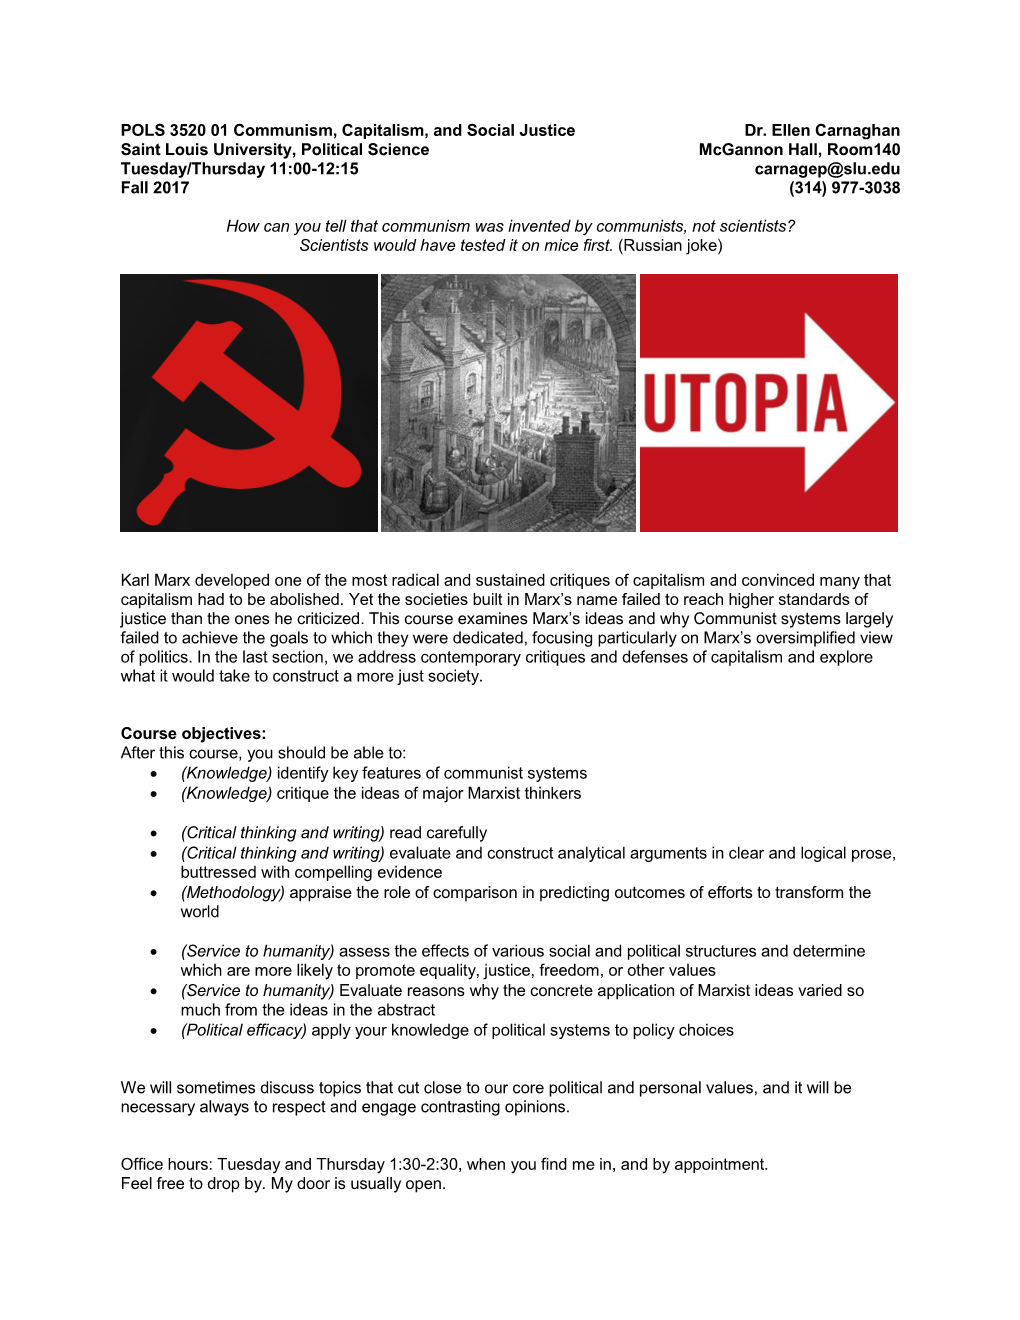 POLS 3520: Communism, Capitalism, and Social Justice, Fall 2017 Syllabus